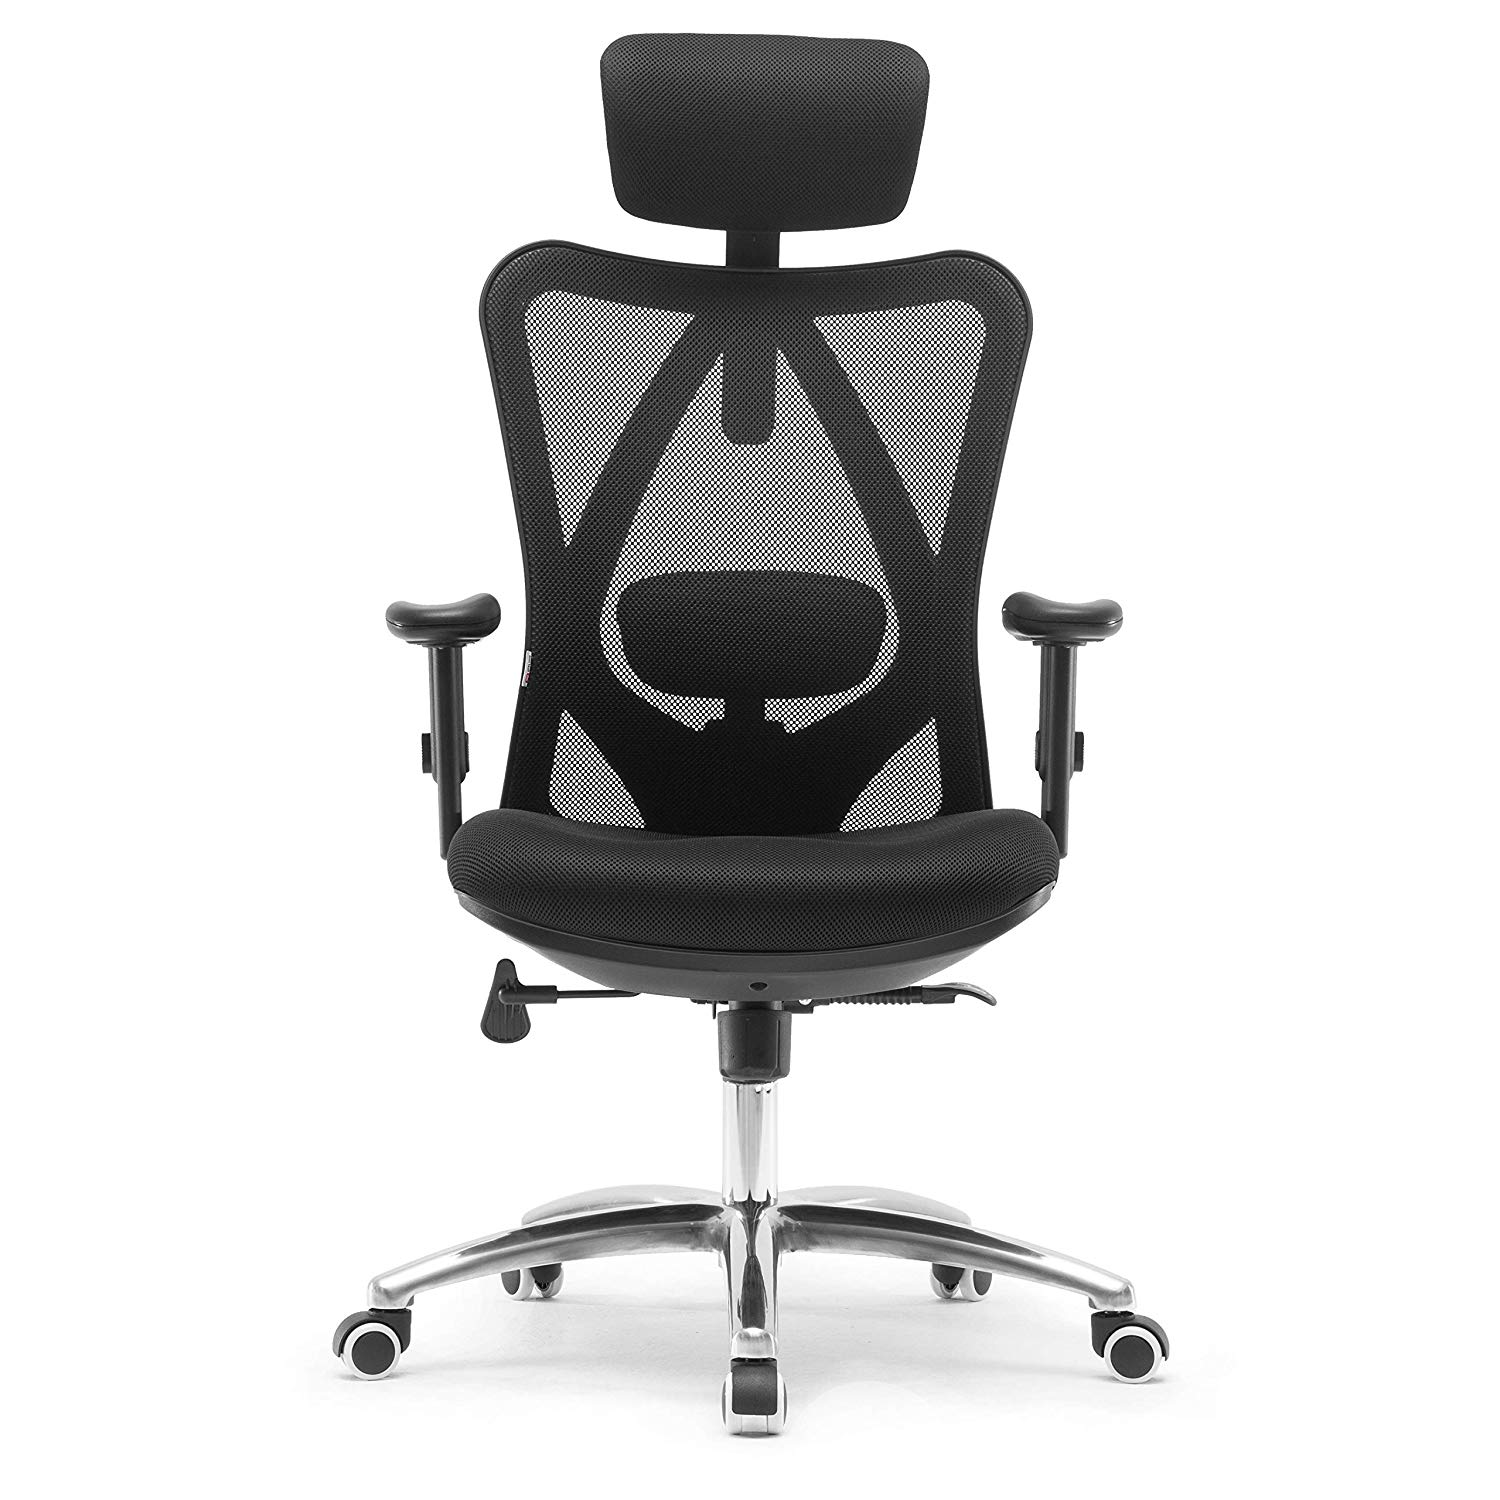 Sihoo Ergonomics Office Chair Computer Chair Desk Chair, Adjustable Headrests Chair Backrest and Armrest's Mesh Chair